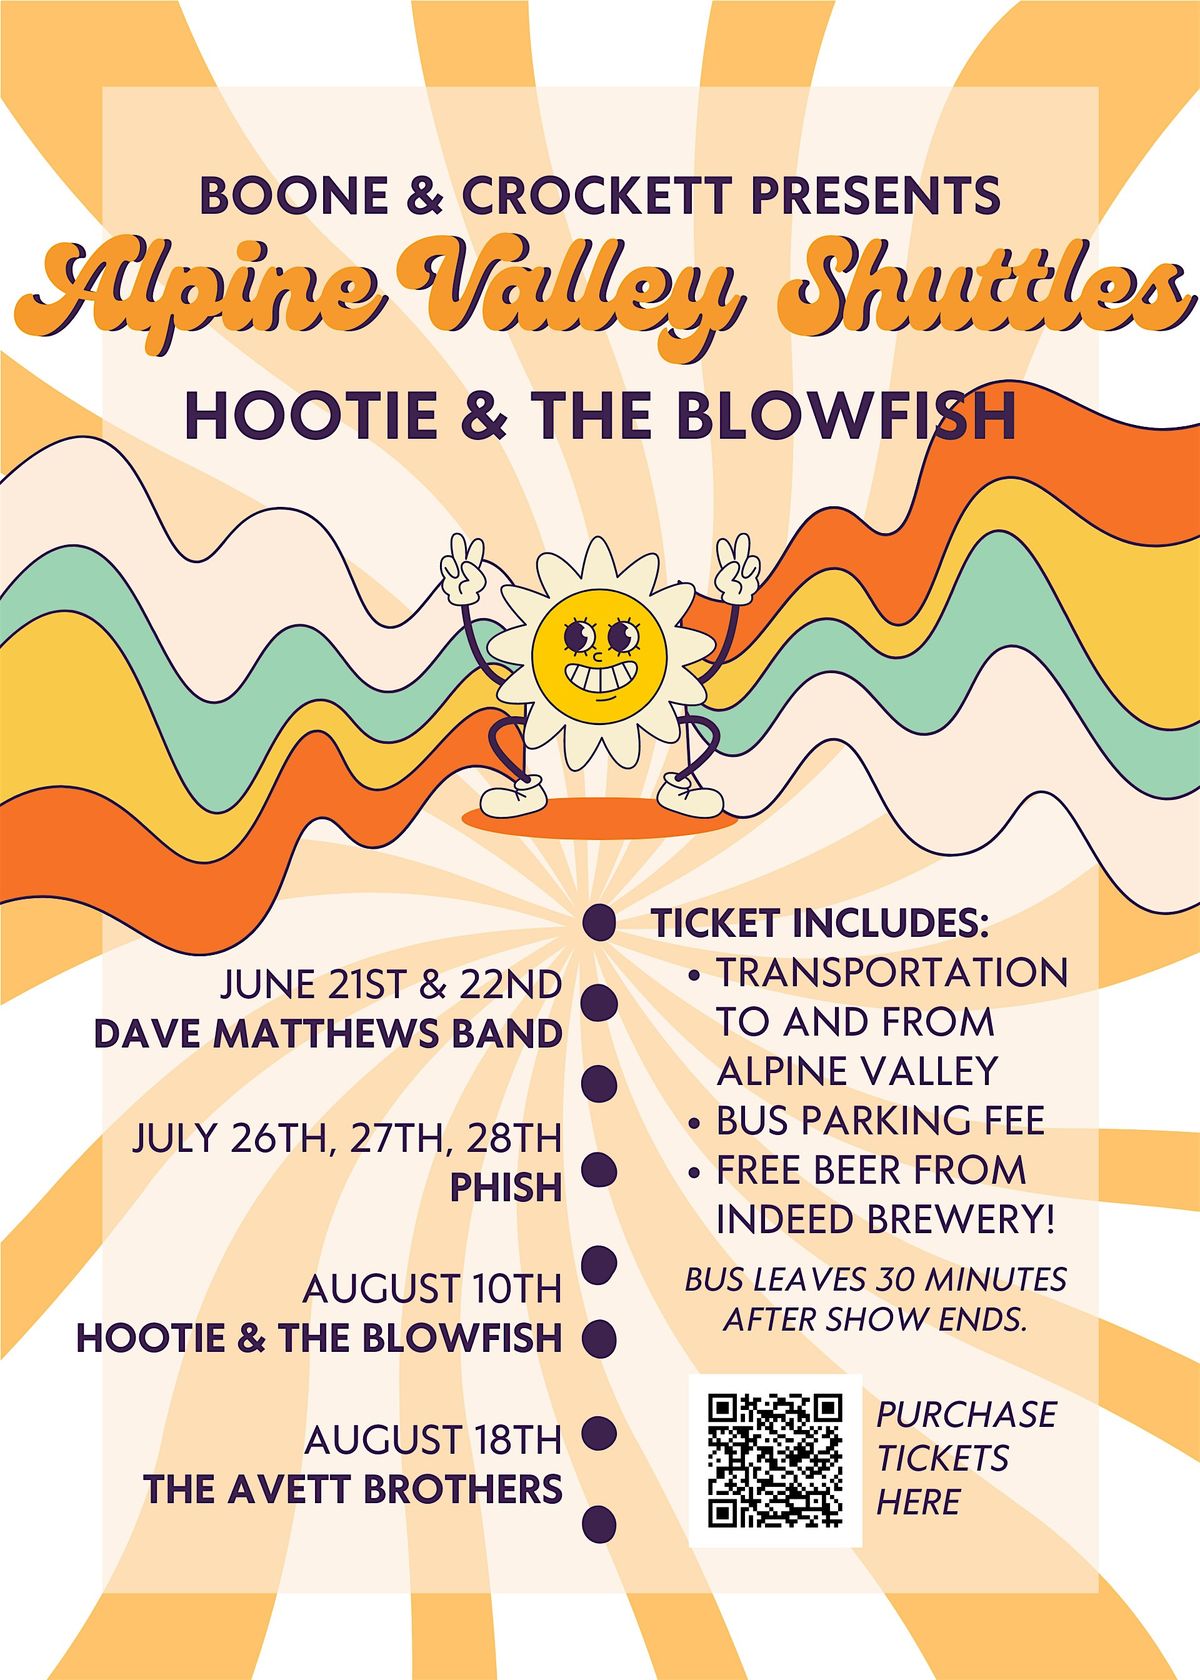 Alpine Valley Shuttle to HOOTIE & THE BLOWFISH